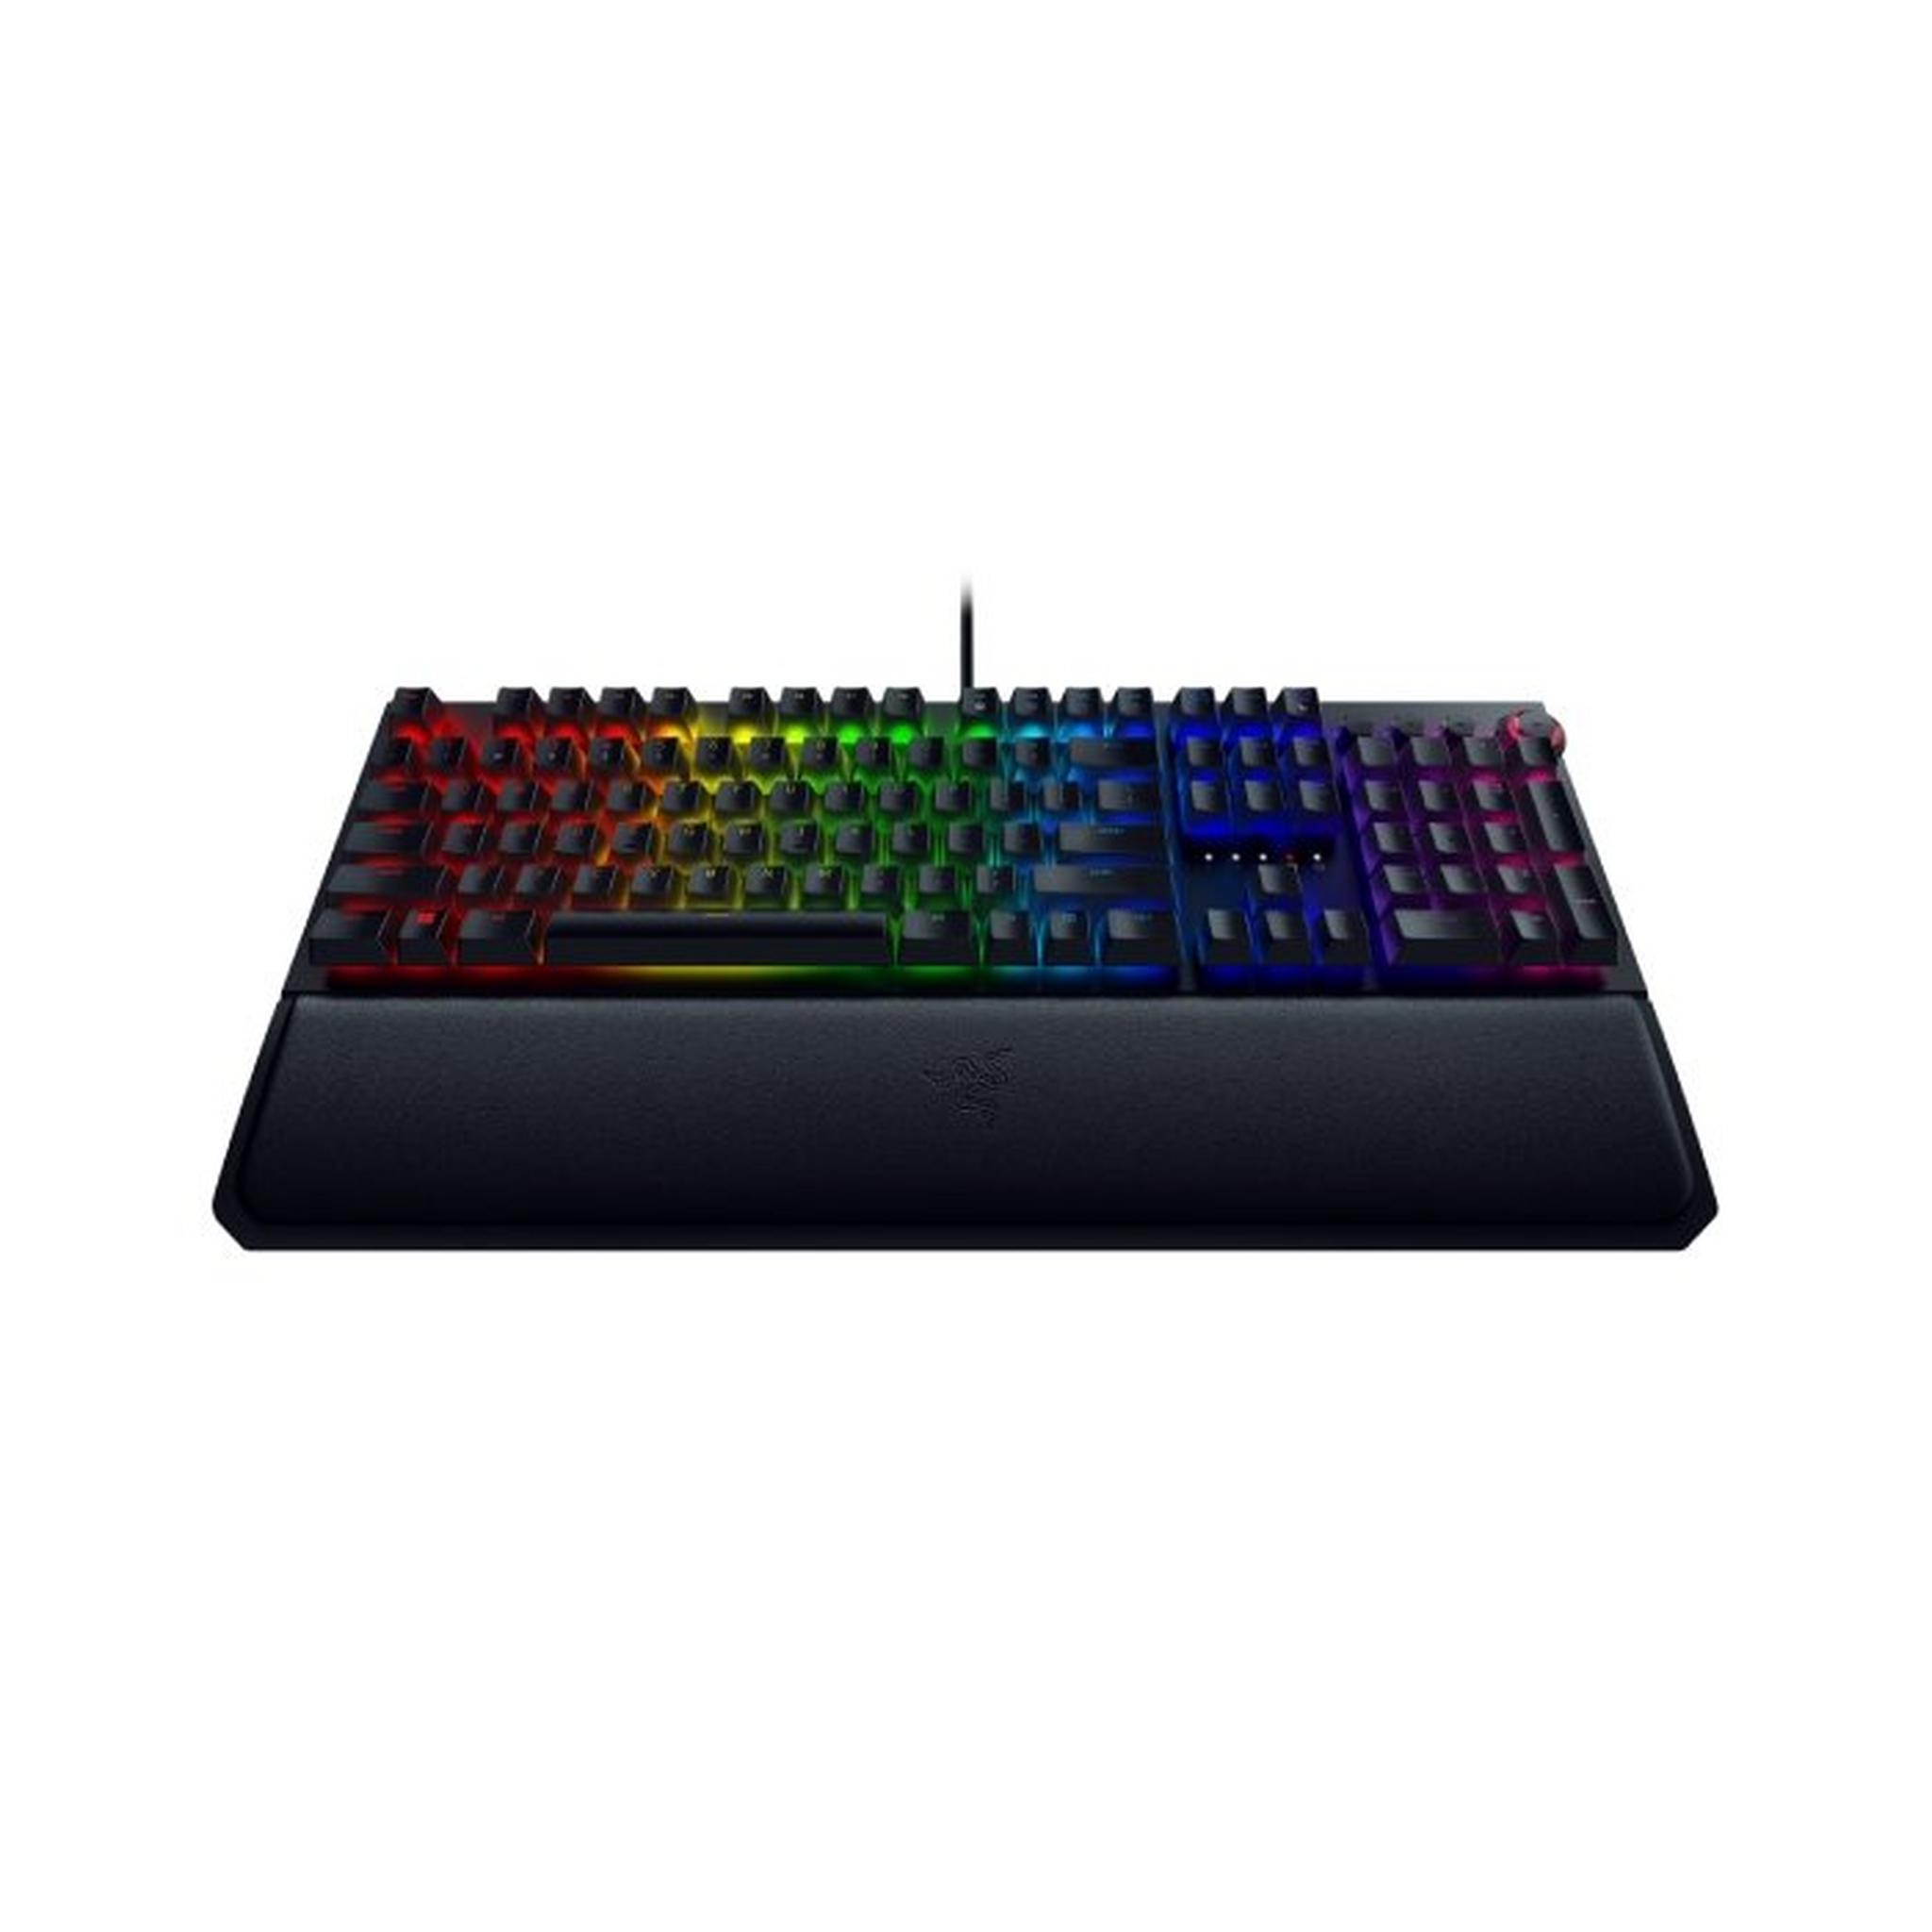 Razer BlackWidow Elite Esports Gaming Keyboard (Tactile and Clicky) - Green